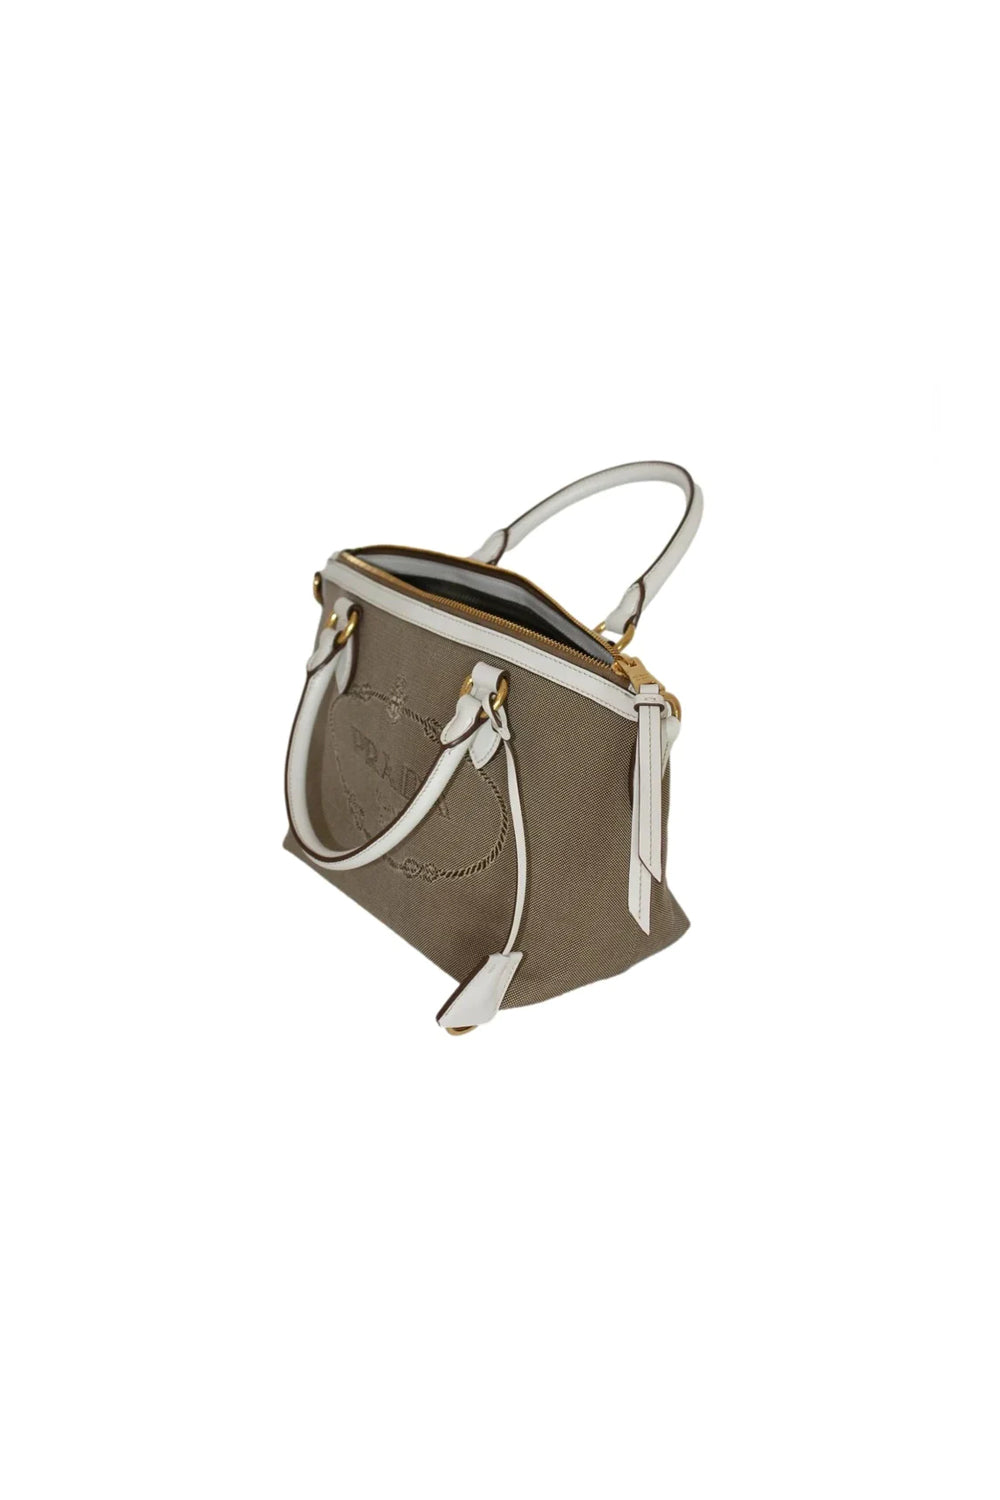 Prada Canvas Jacquard Logo Leather Trim Satchel Bag